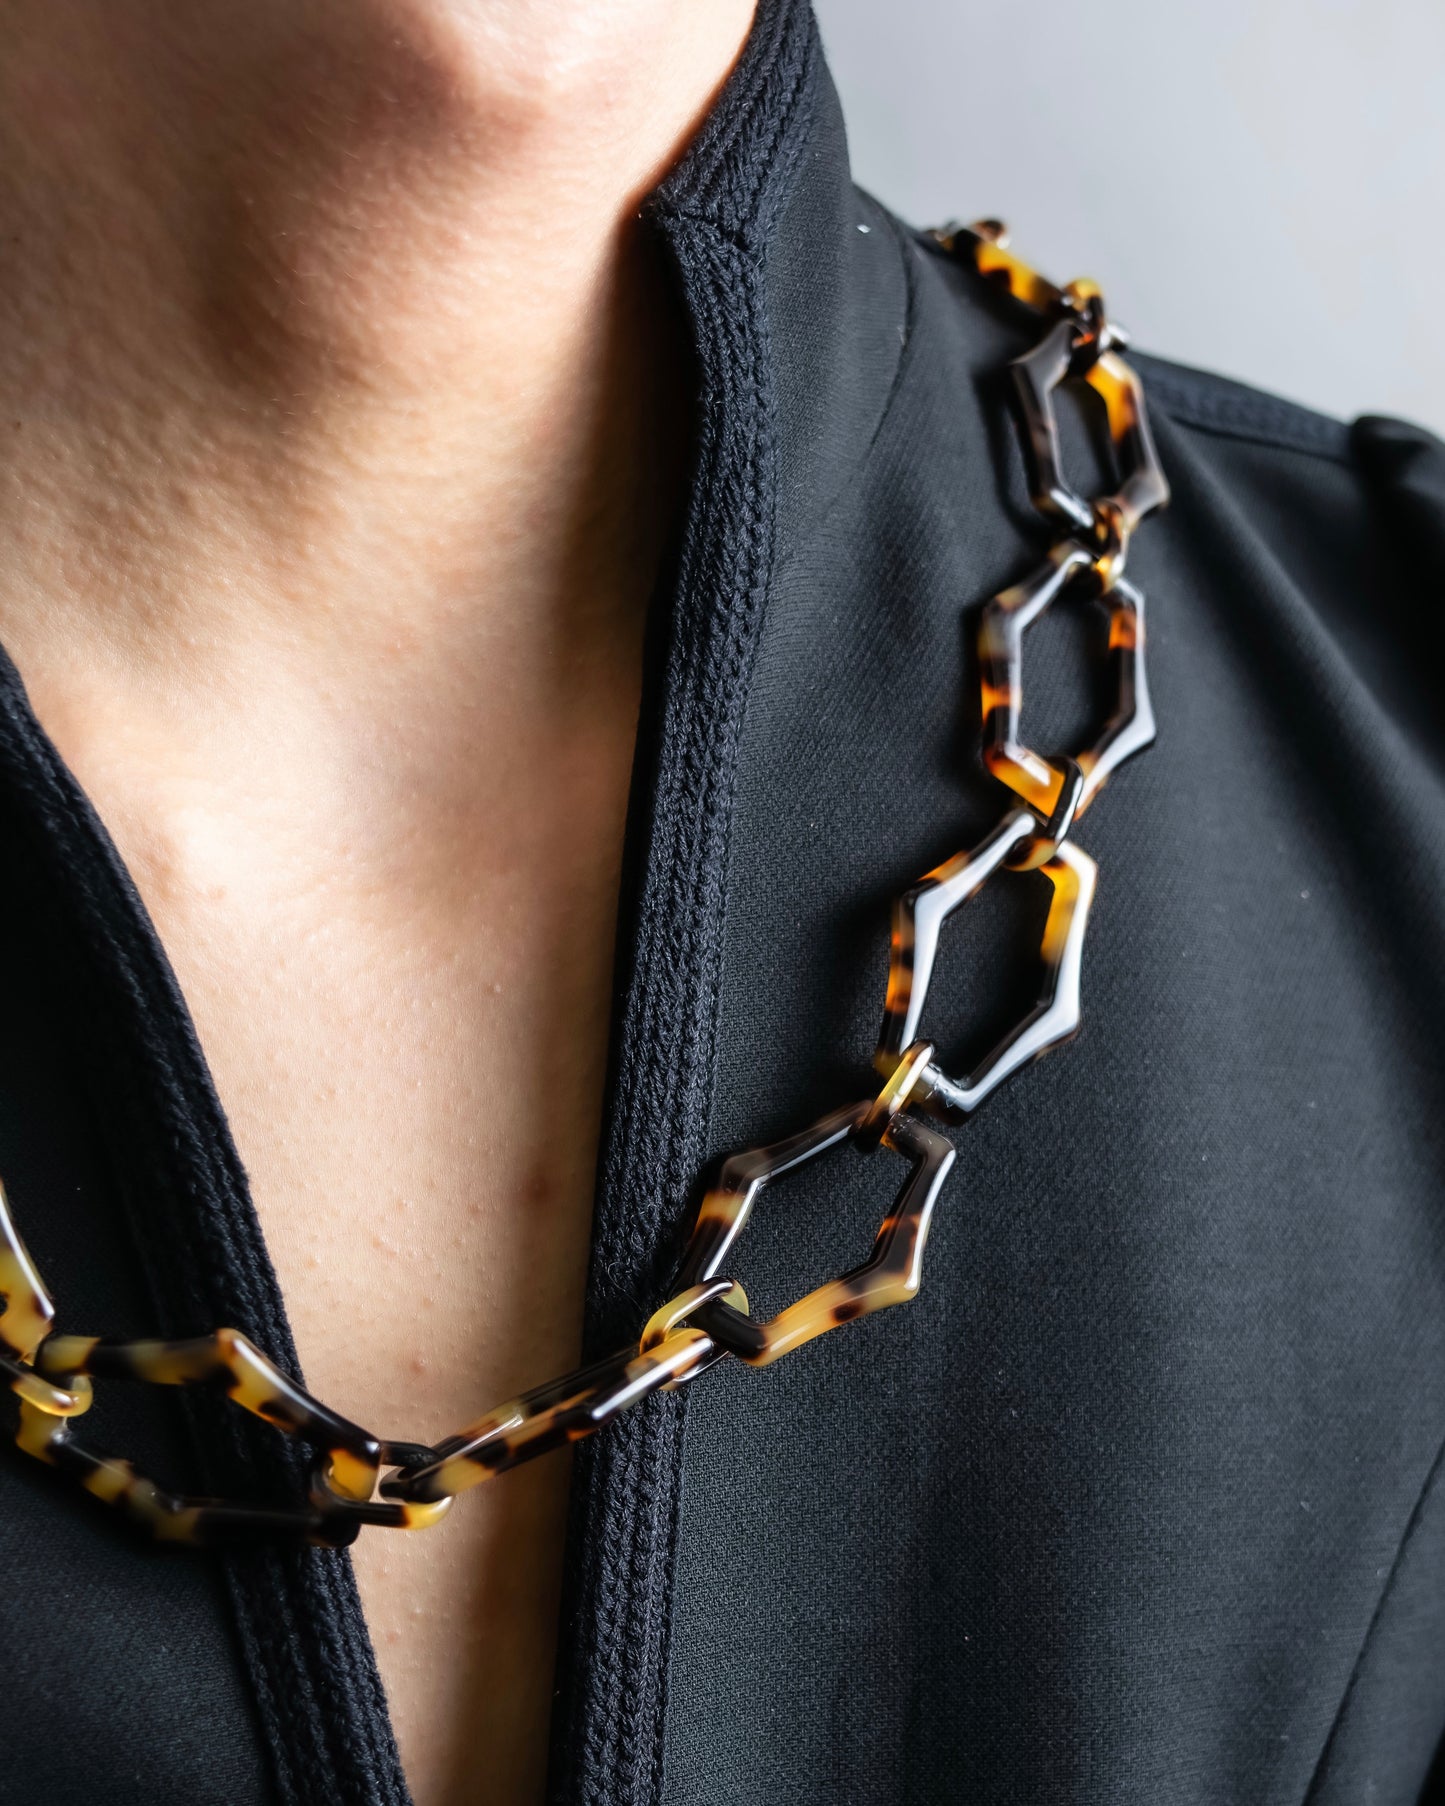 "PRADA" Tortoiseshell pattern large chain necklace